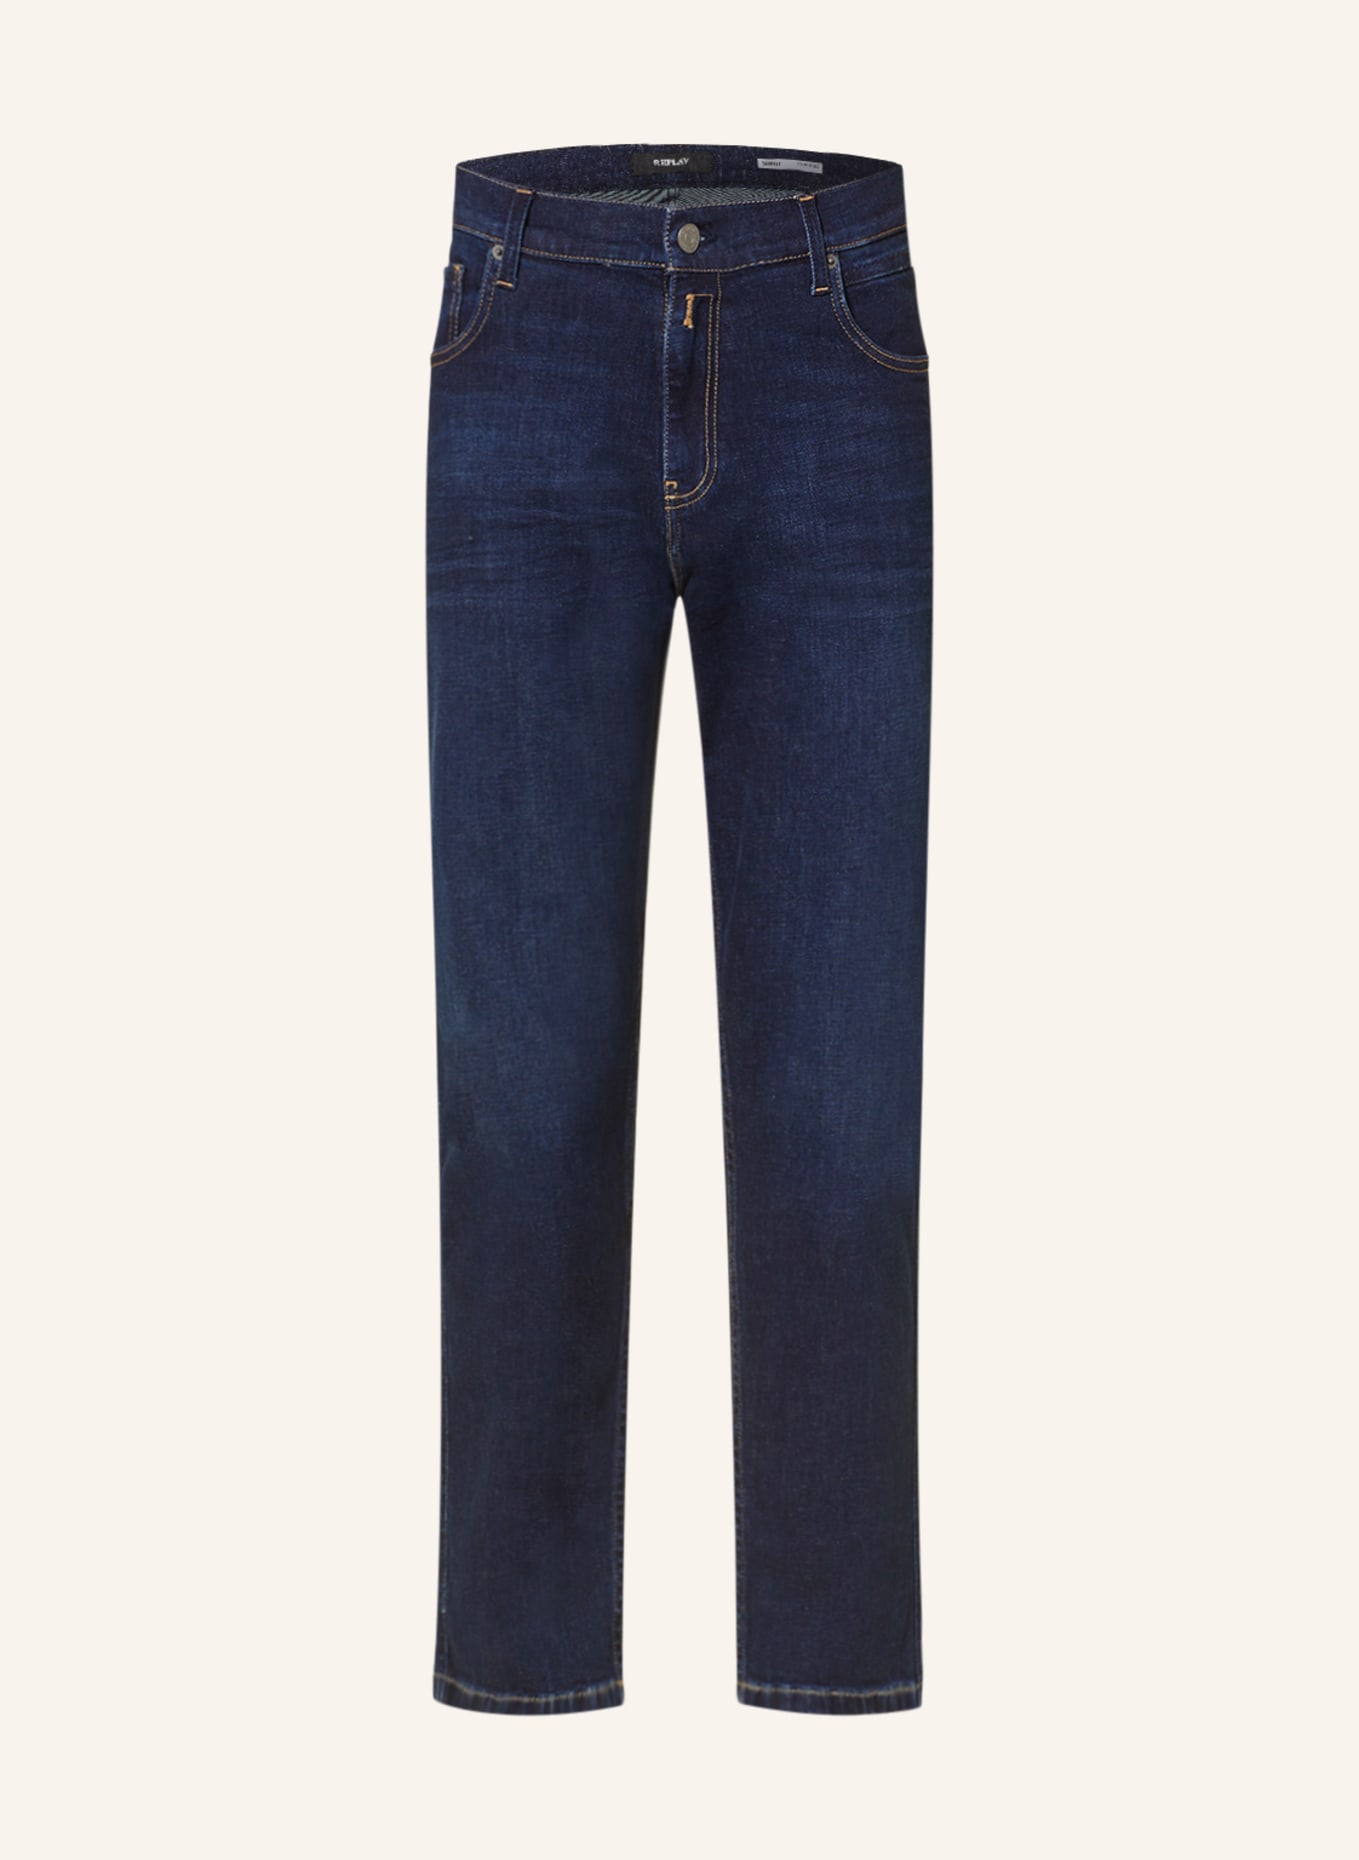 REPLAY Jeans SANDOT Relaxed Tapered, Farbe: 007 DARK BLUE (Bild 1)